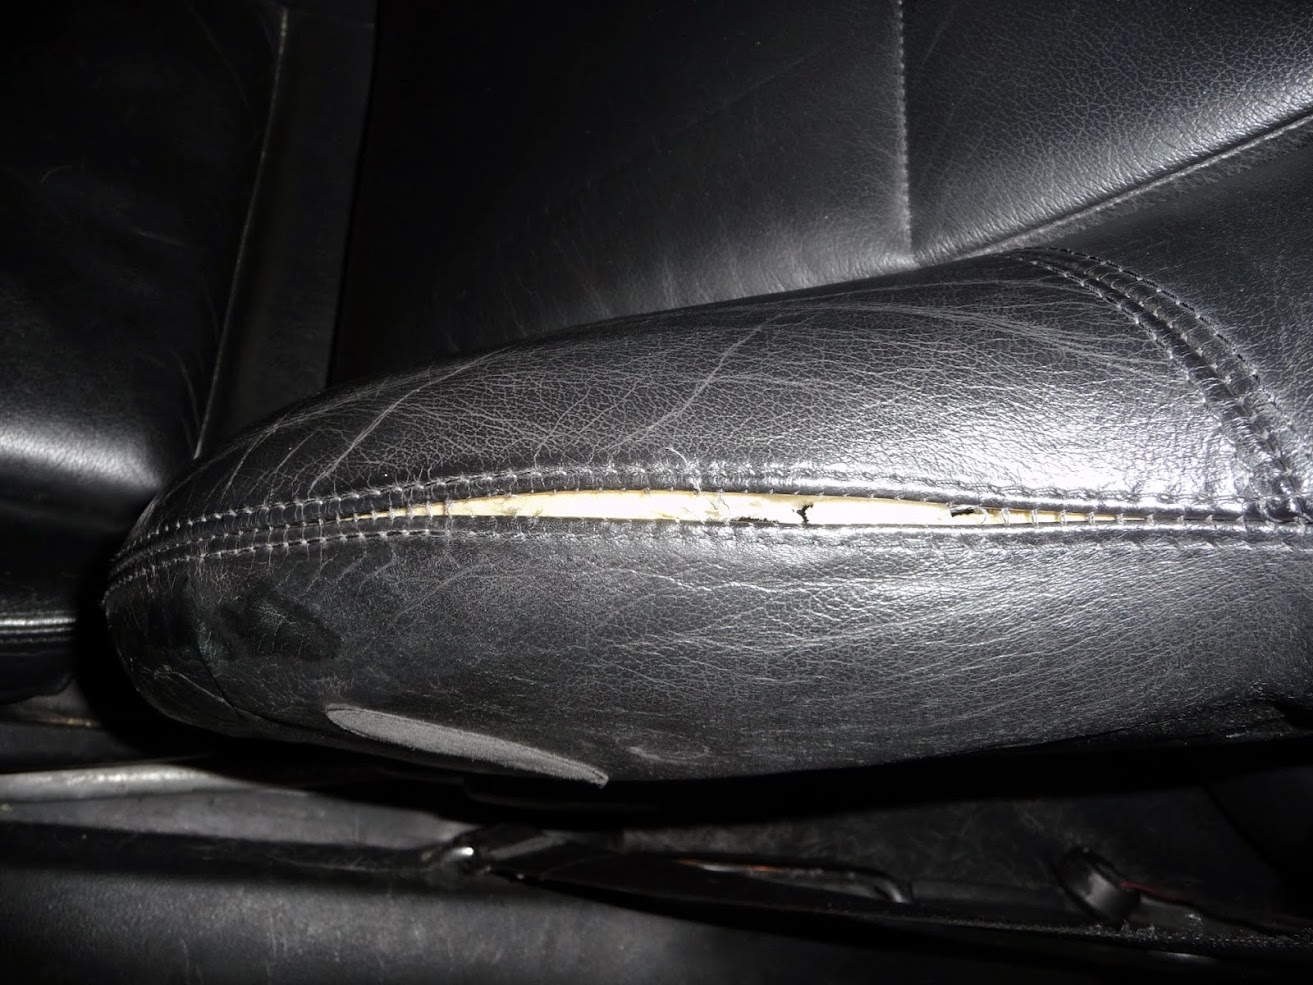 Diy sewing awl leather seat fix!!! | VW Vortex - Volkswagen Forum